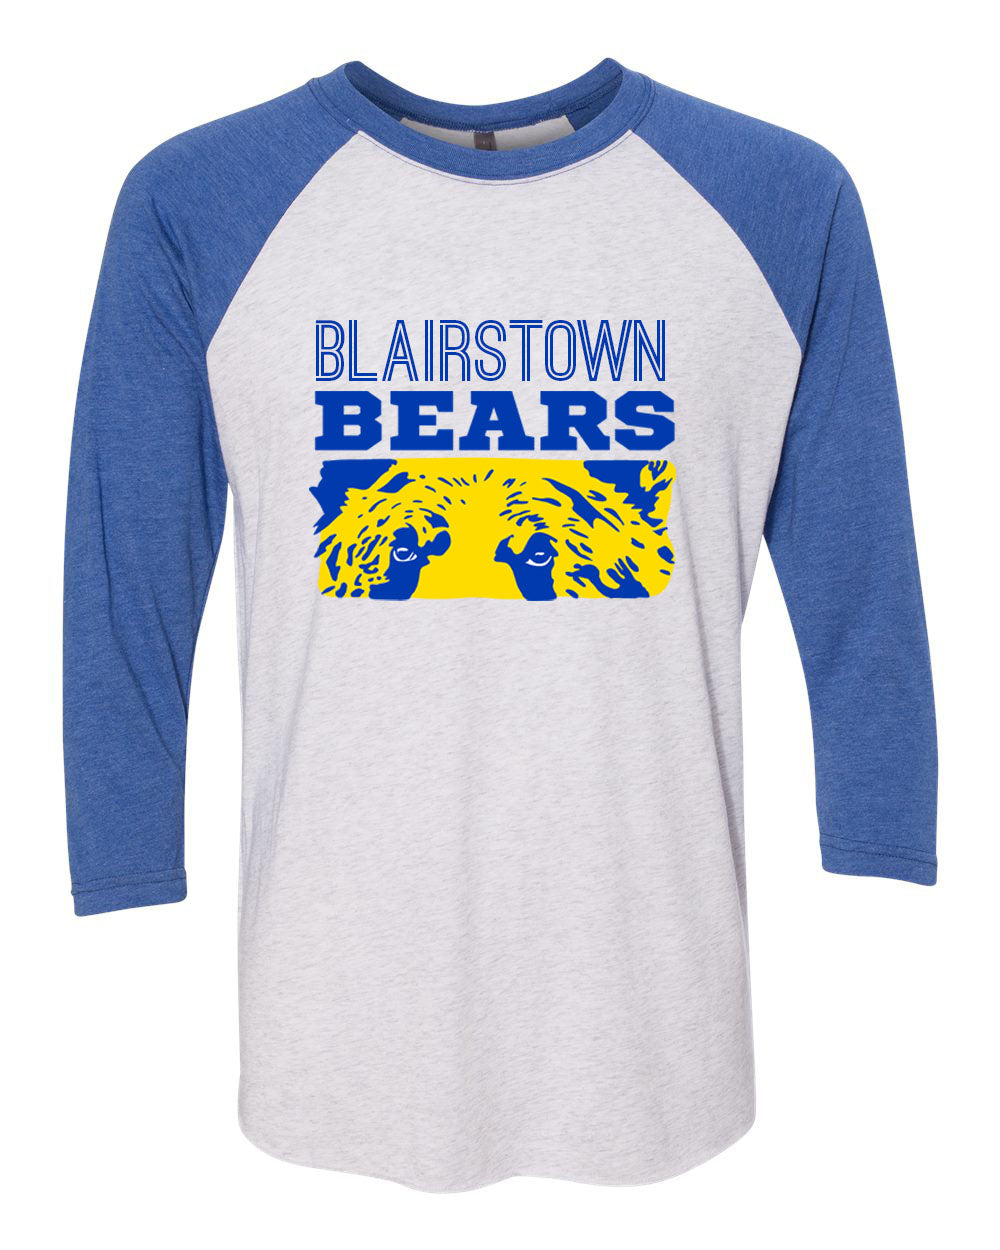 Bears design 4 raglan shirt